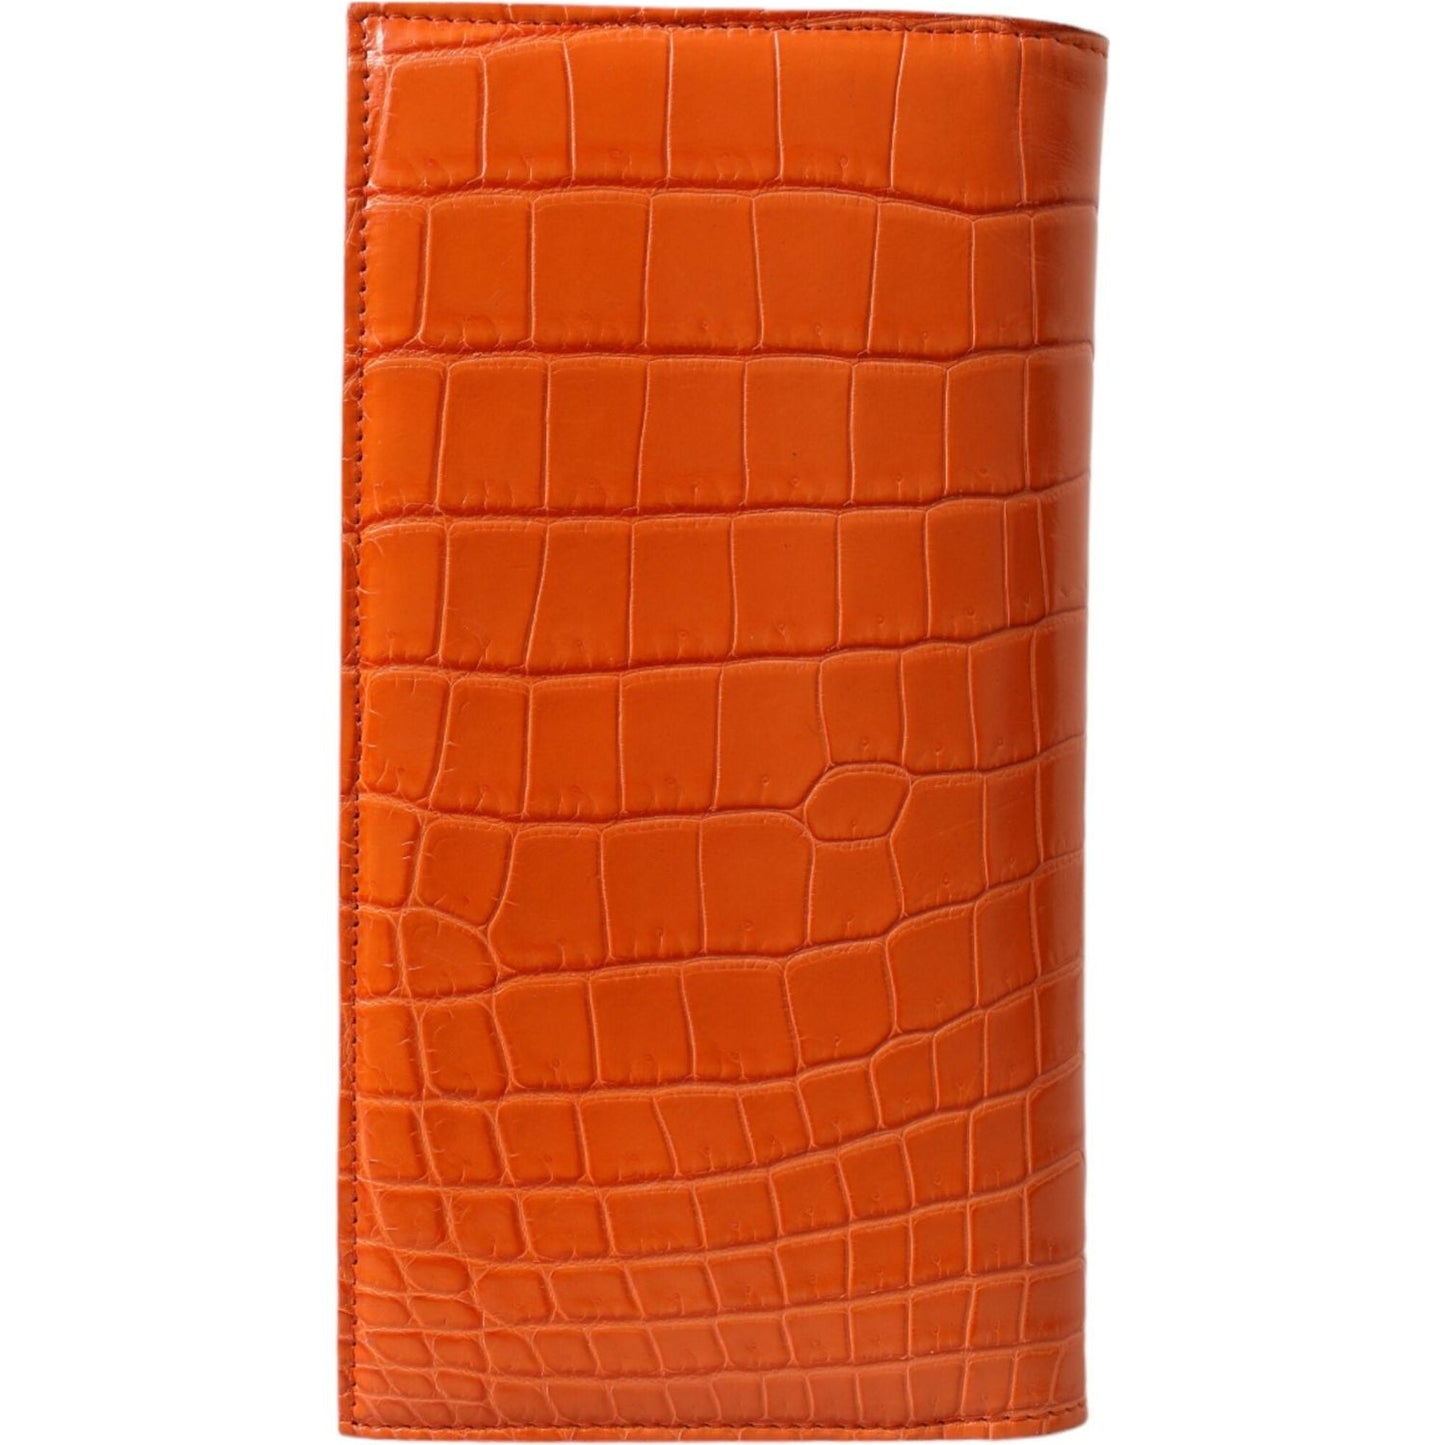 Dolce & Gabbana Chic Orange Crocodile Leather Wallet orange-crocodile-leather-long-bifold-card-holder-wallet